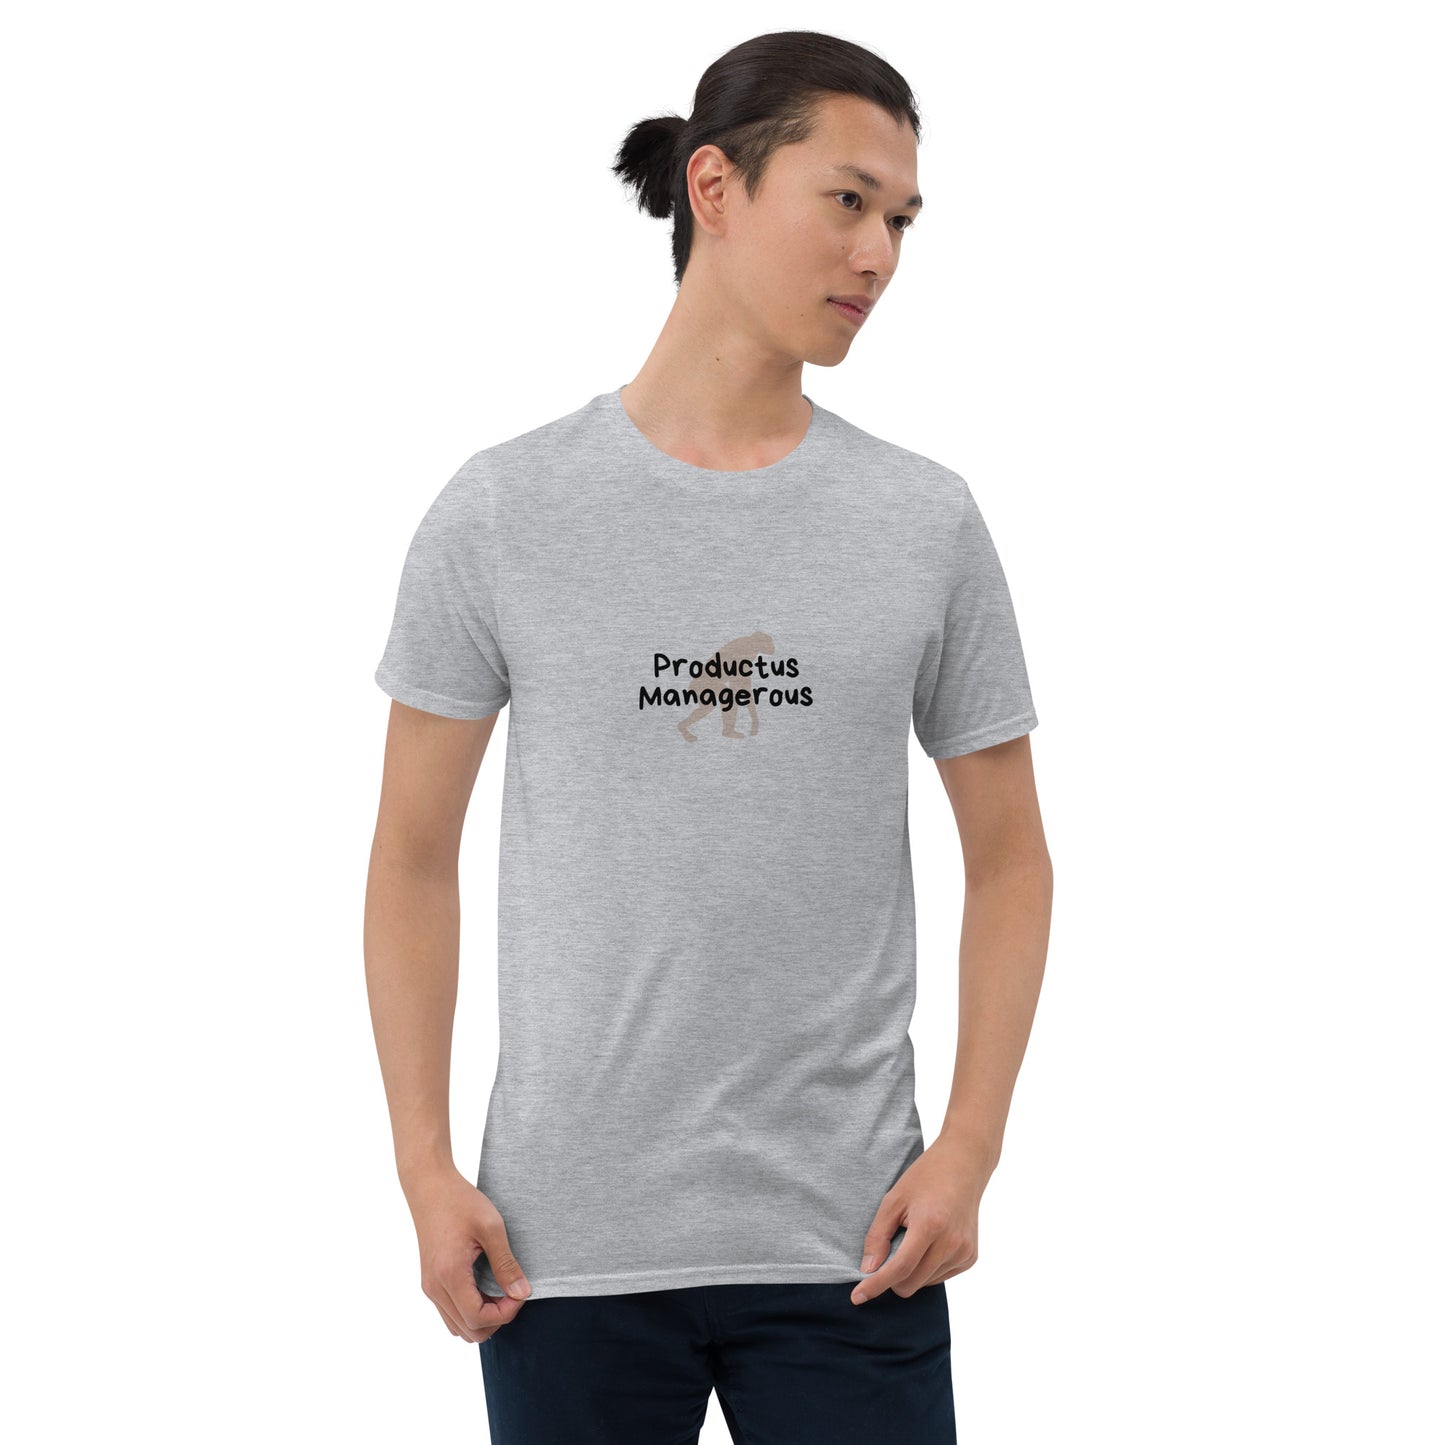 Productus Managerous Unisex T-Shirt